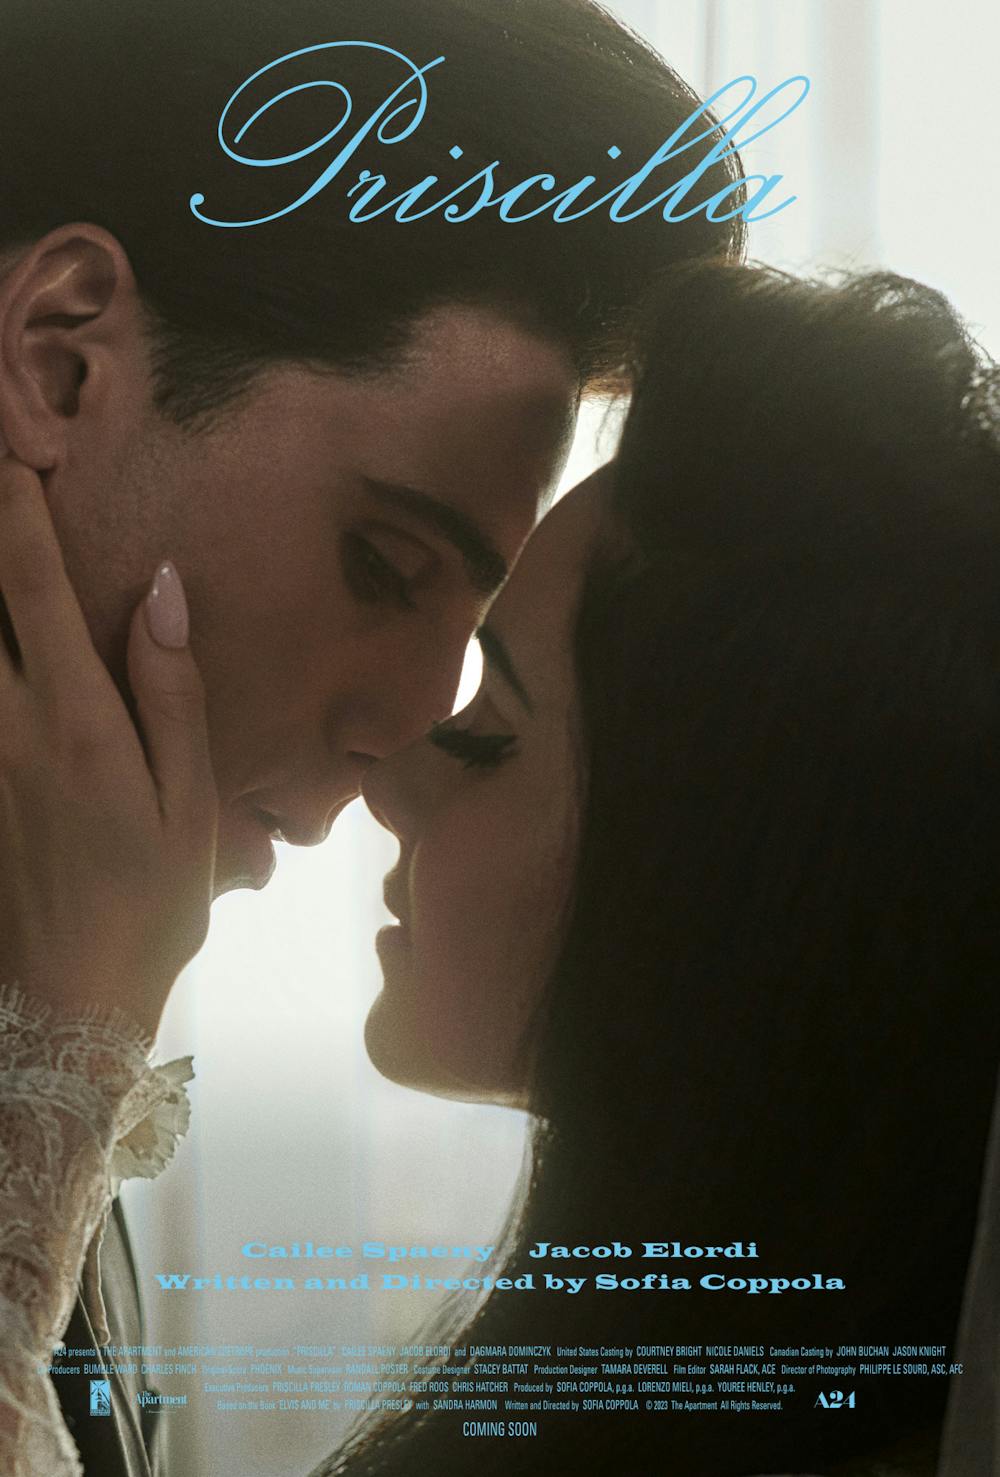 Review: "Priscilla" spotlights the dark side of the Presleys' marriage